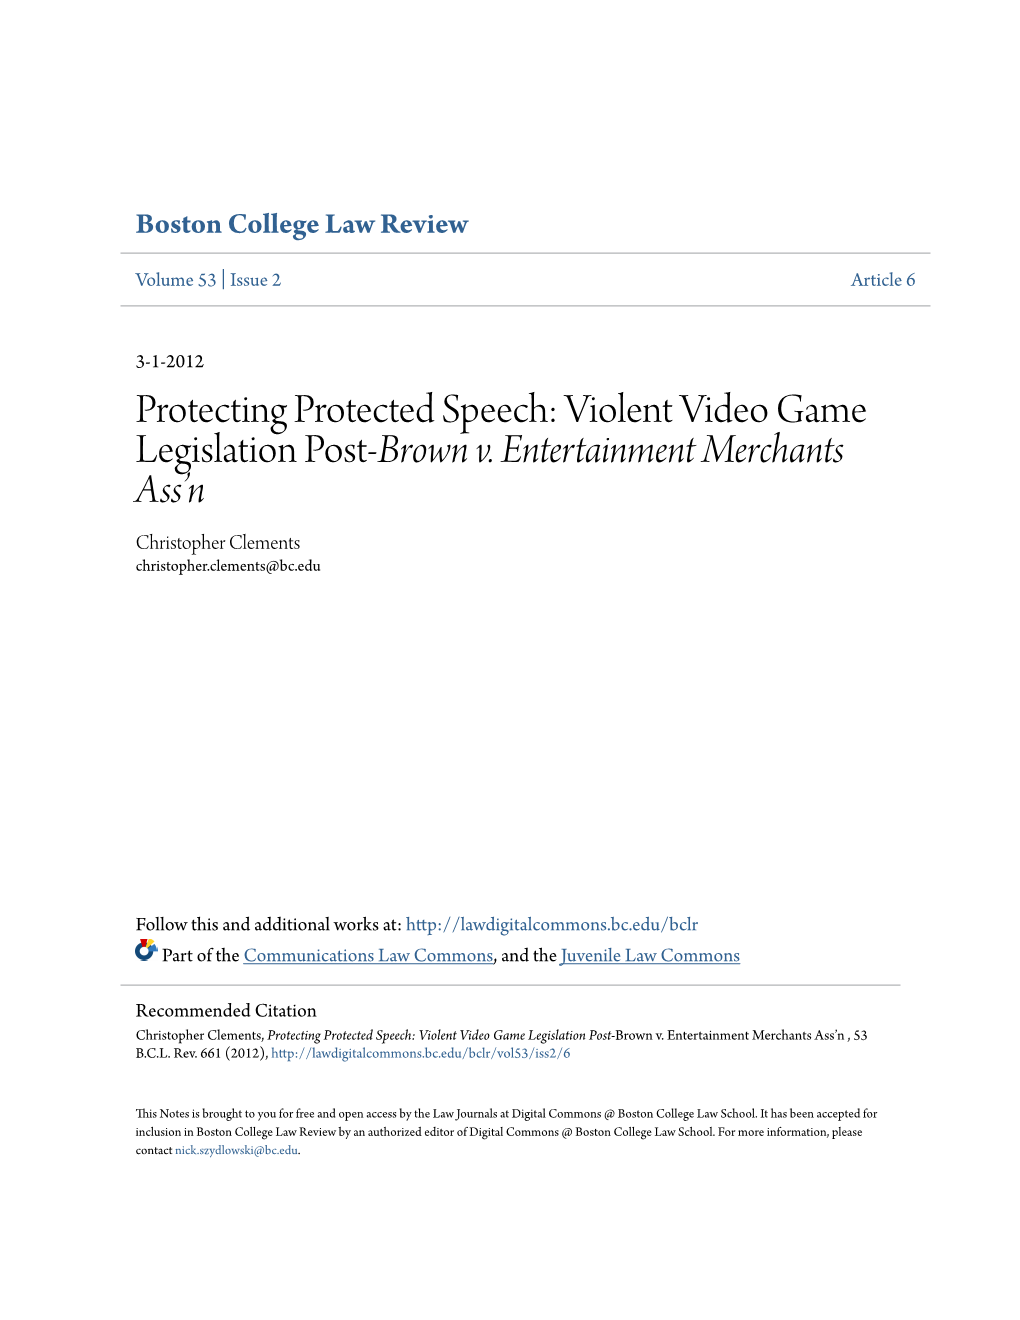 Violent Video Game Legislation Post-Brown V. Entertainment Merchants Ass’N Christopher Clements Christopher.Clements@Bc.Edu